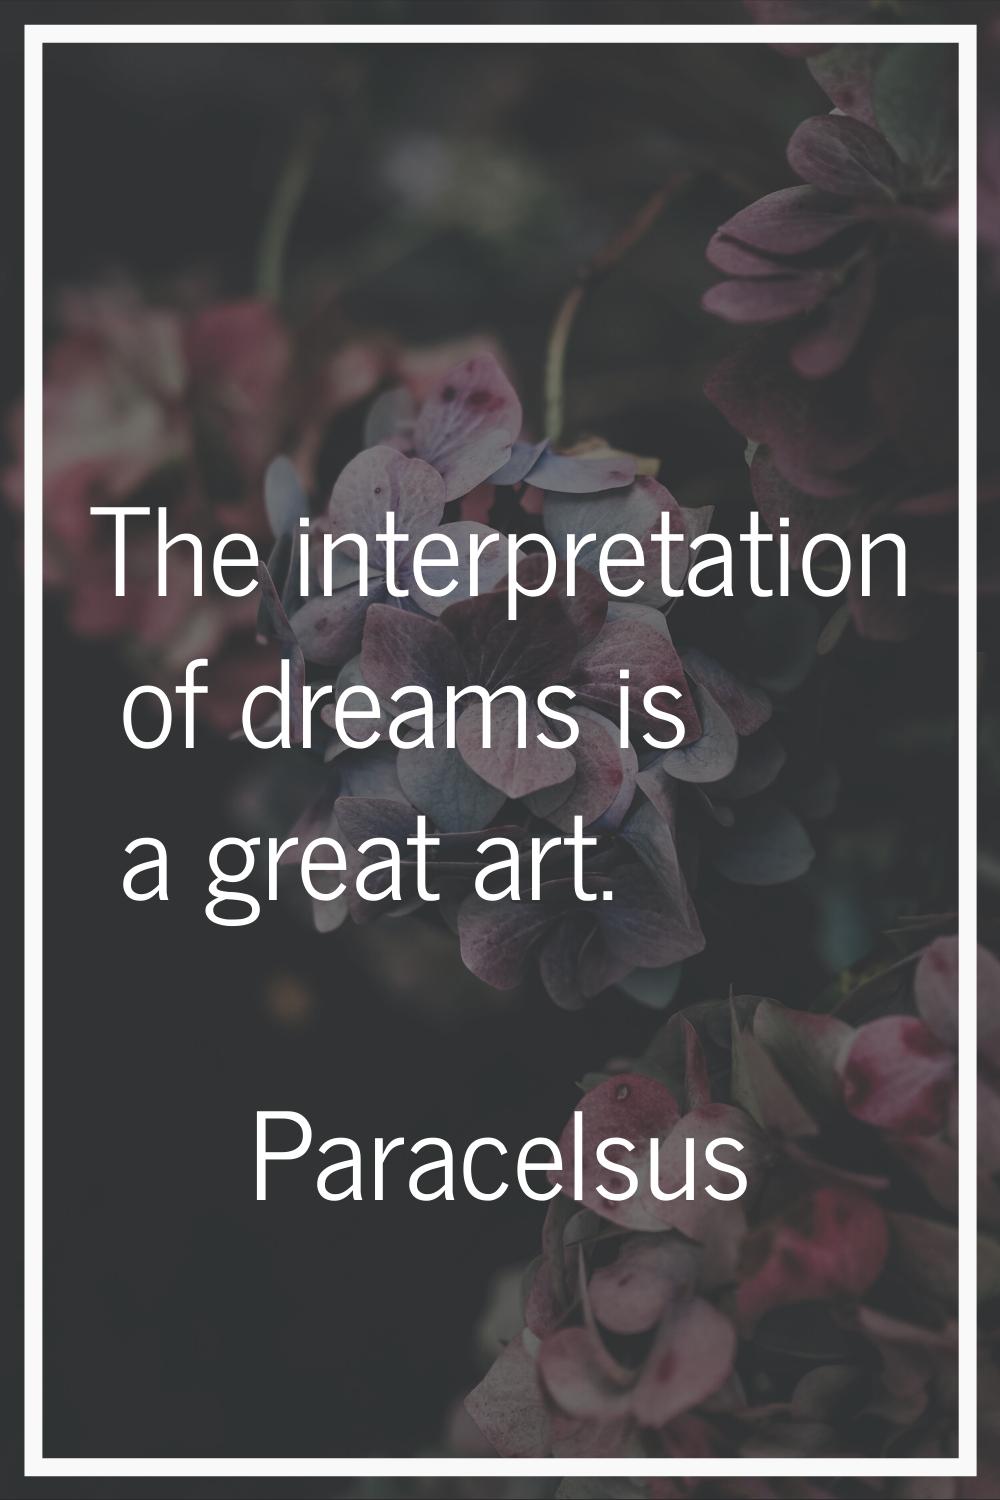 The interpretation of dreams is a great art.